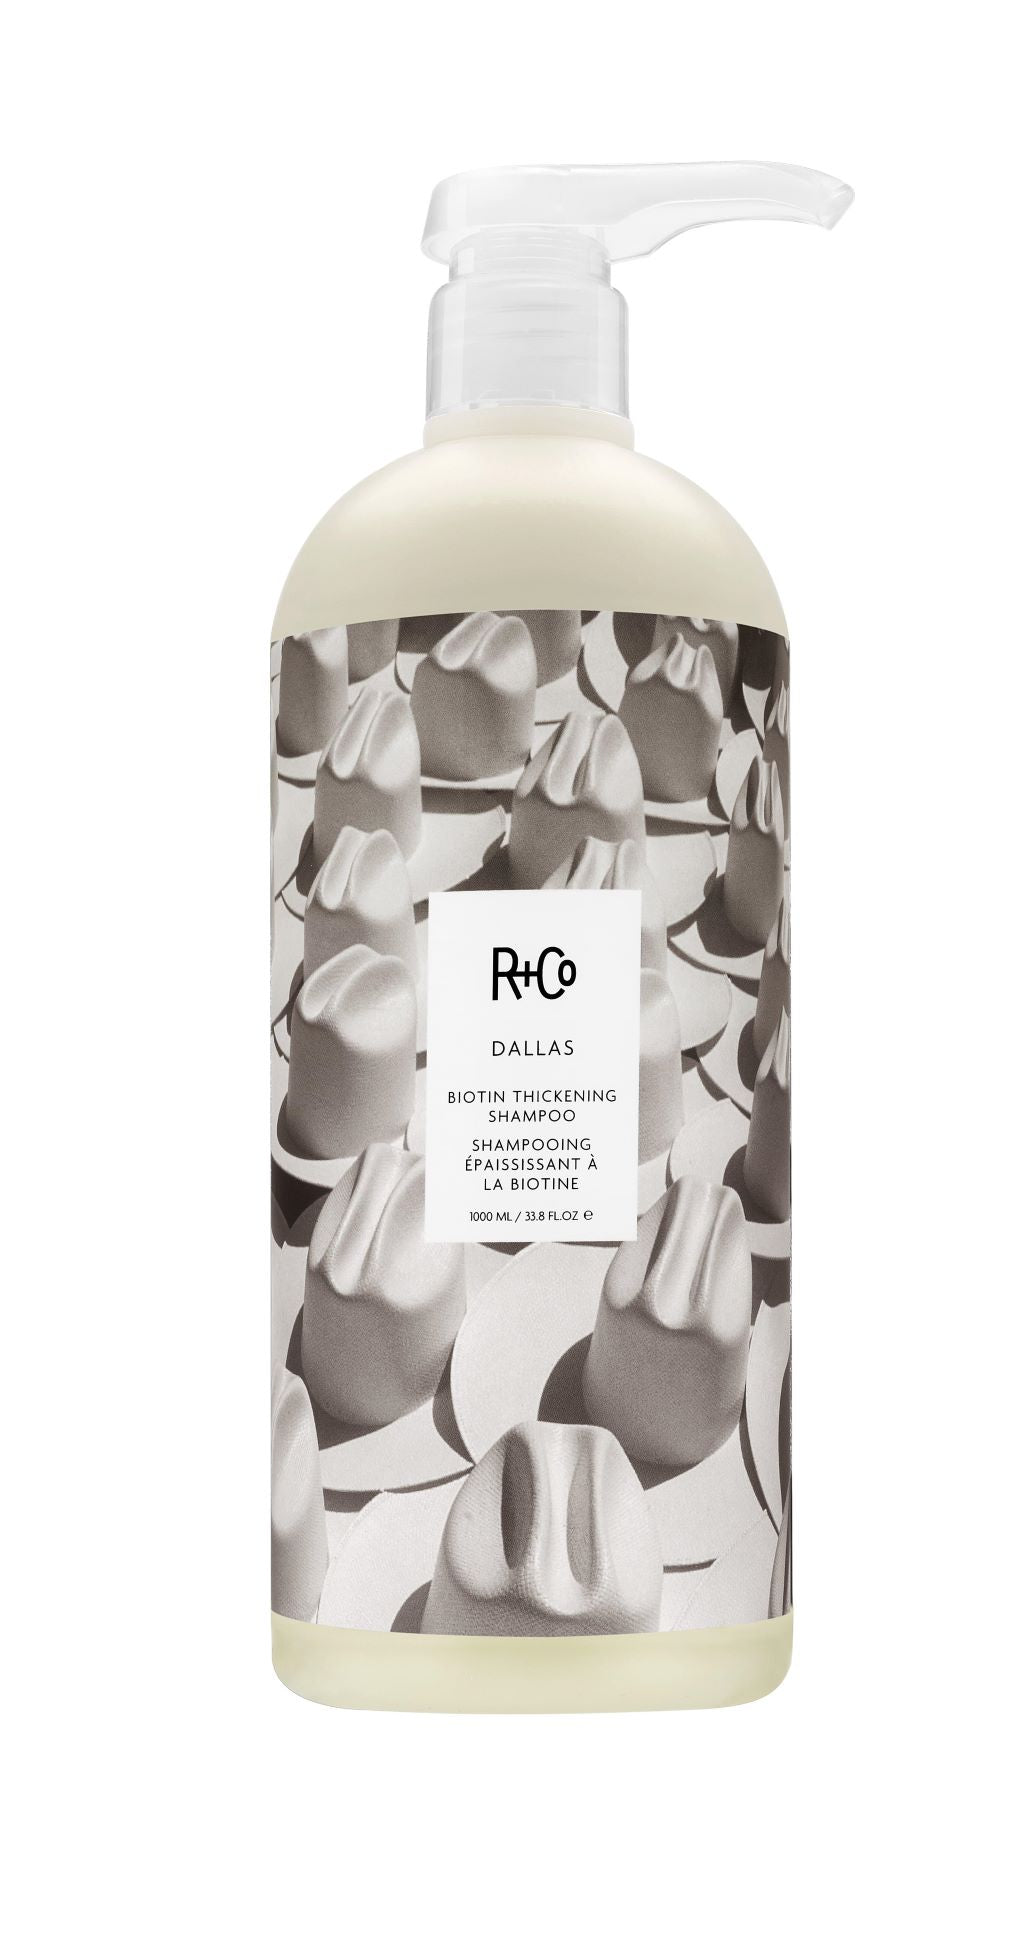 R+Co Dallas Biotin Thickening Shampoo 1 Liter